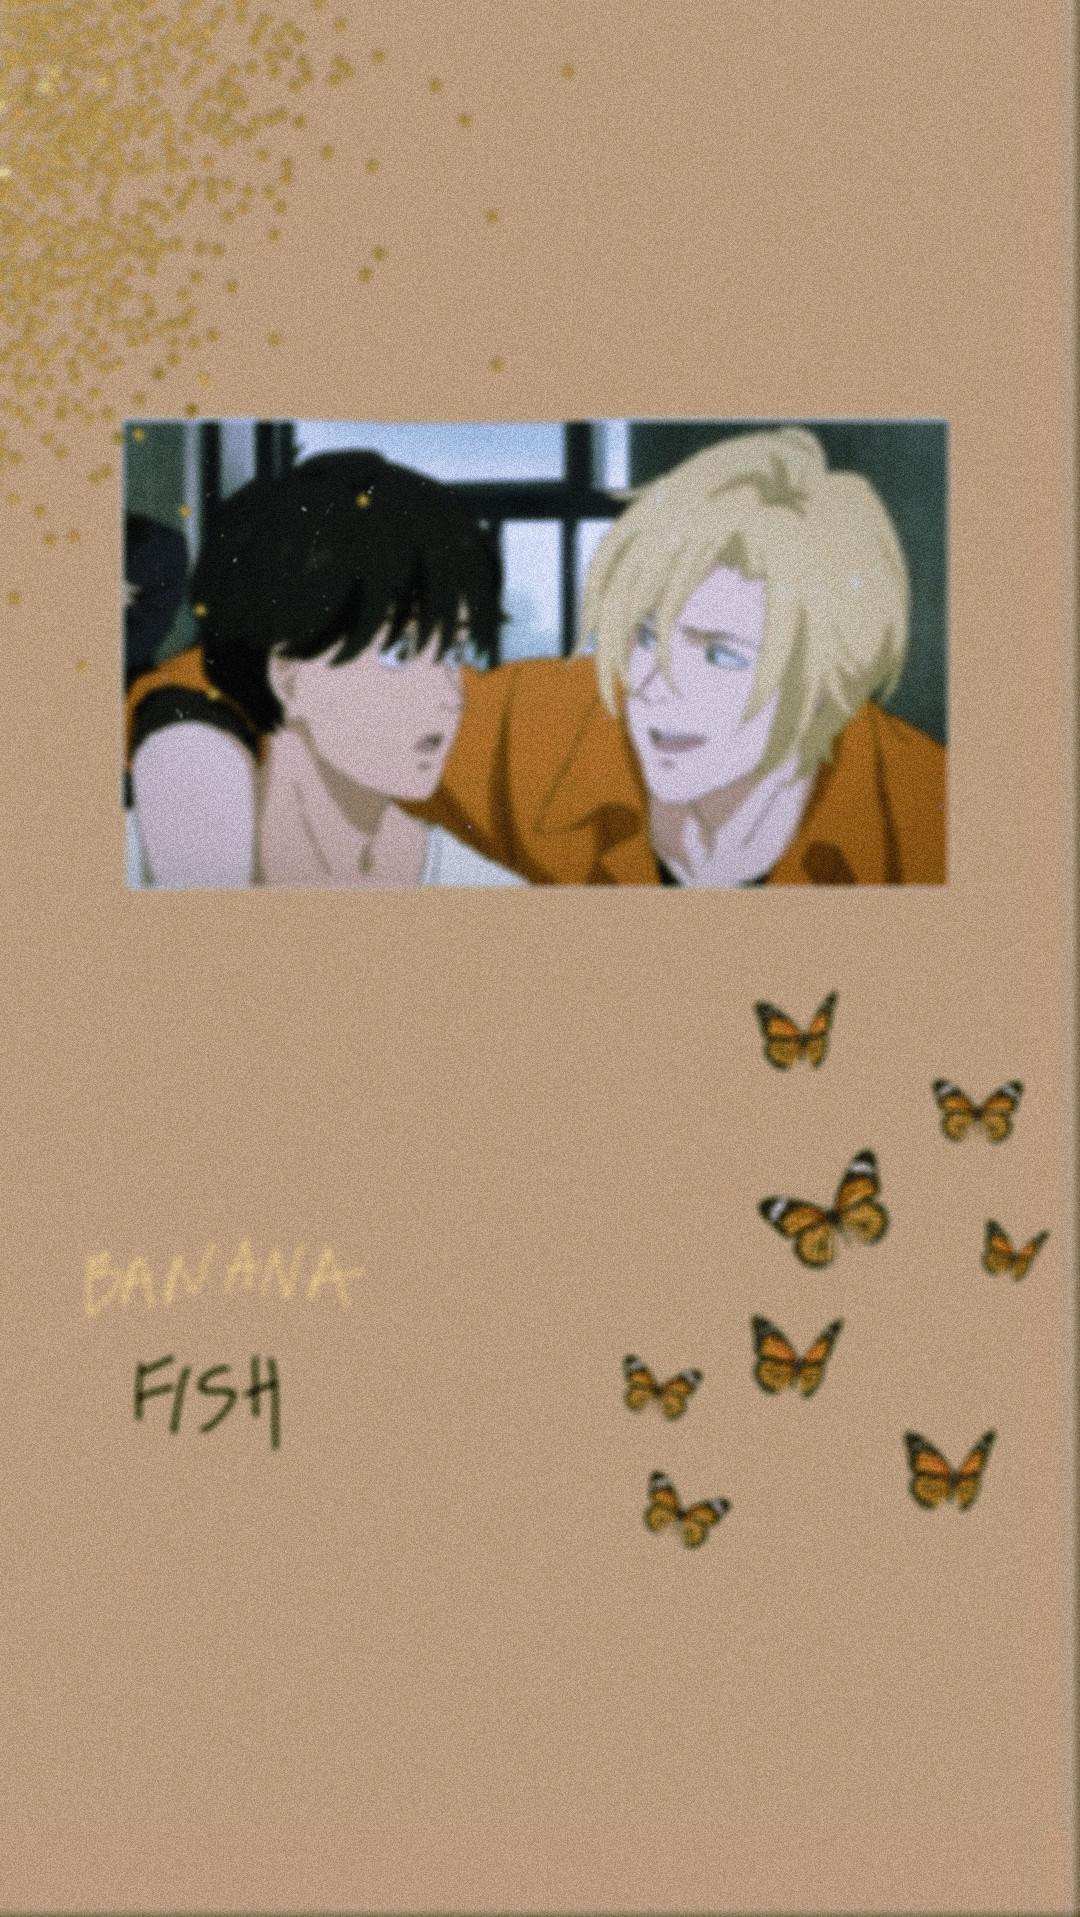 Anime Banana Fish HD Wallpaper